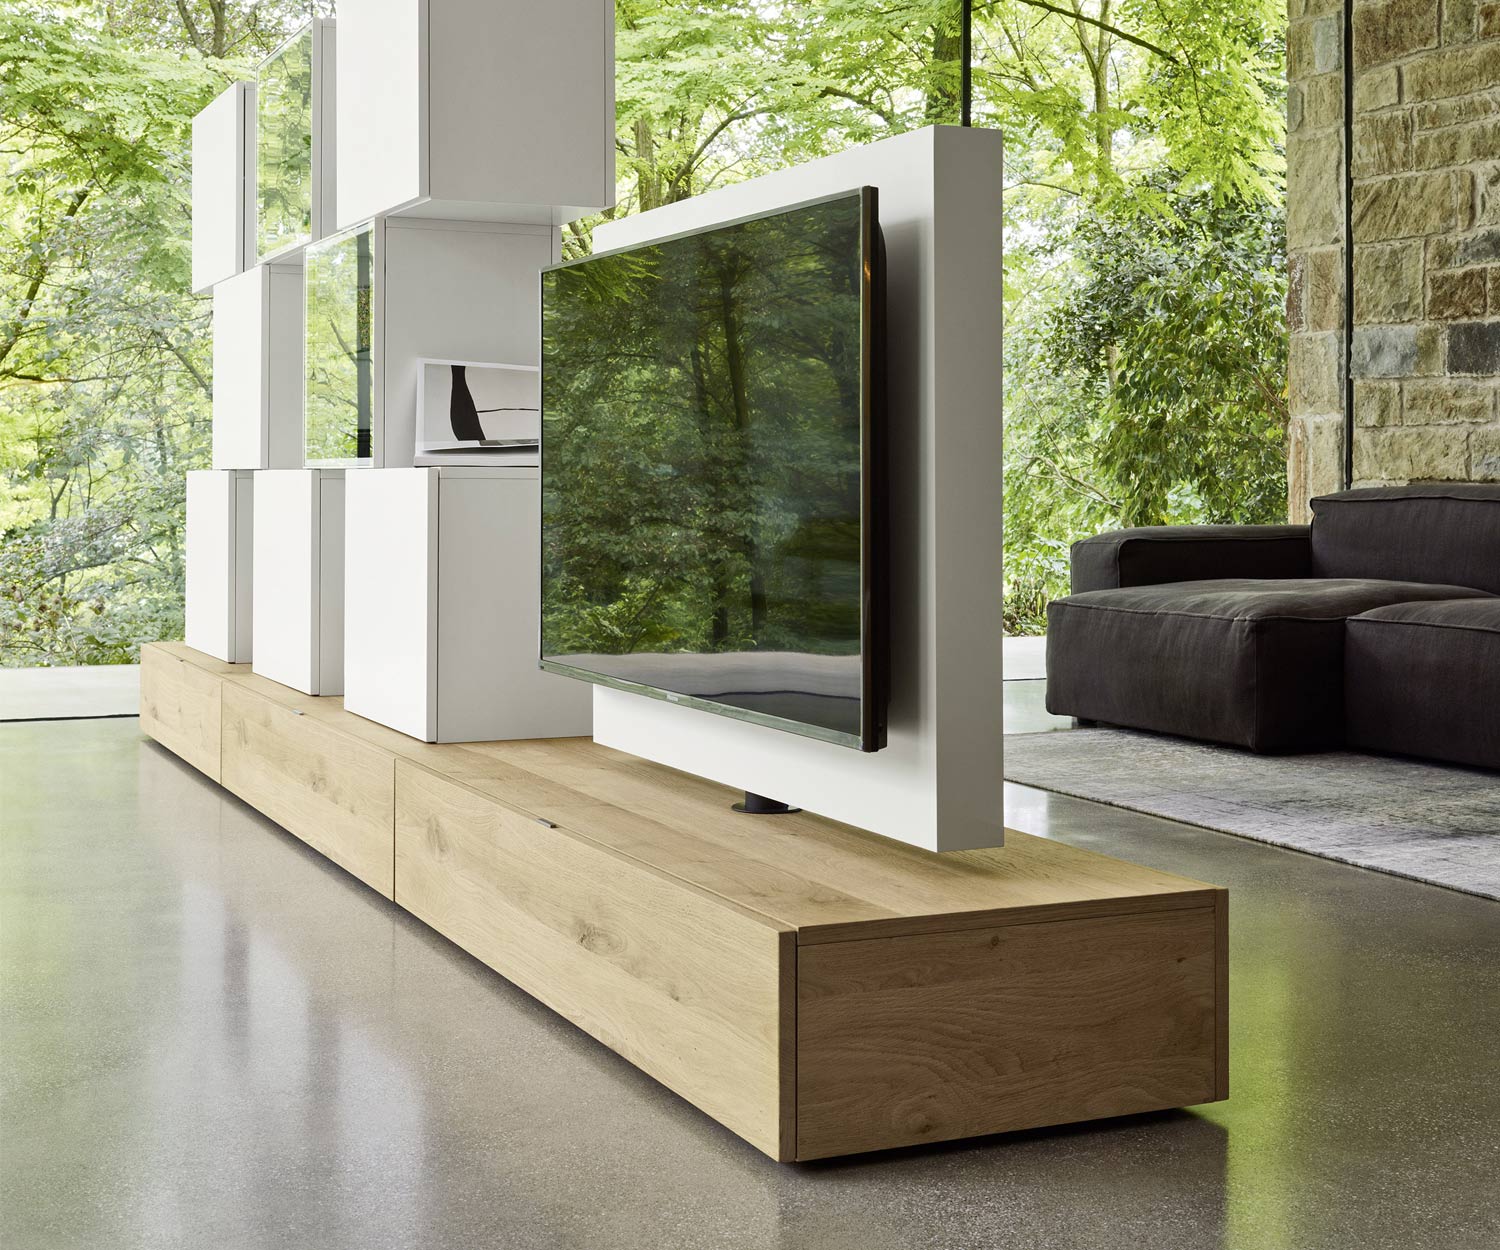 Exclusive Livitalia Roto Design Lowboard Design room divider with swivelling TV panel